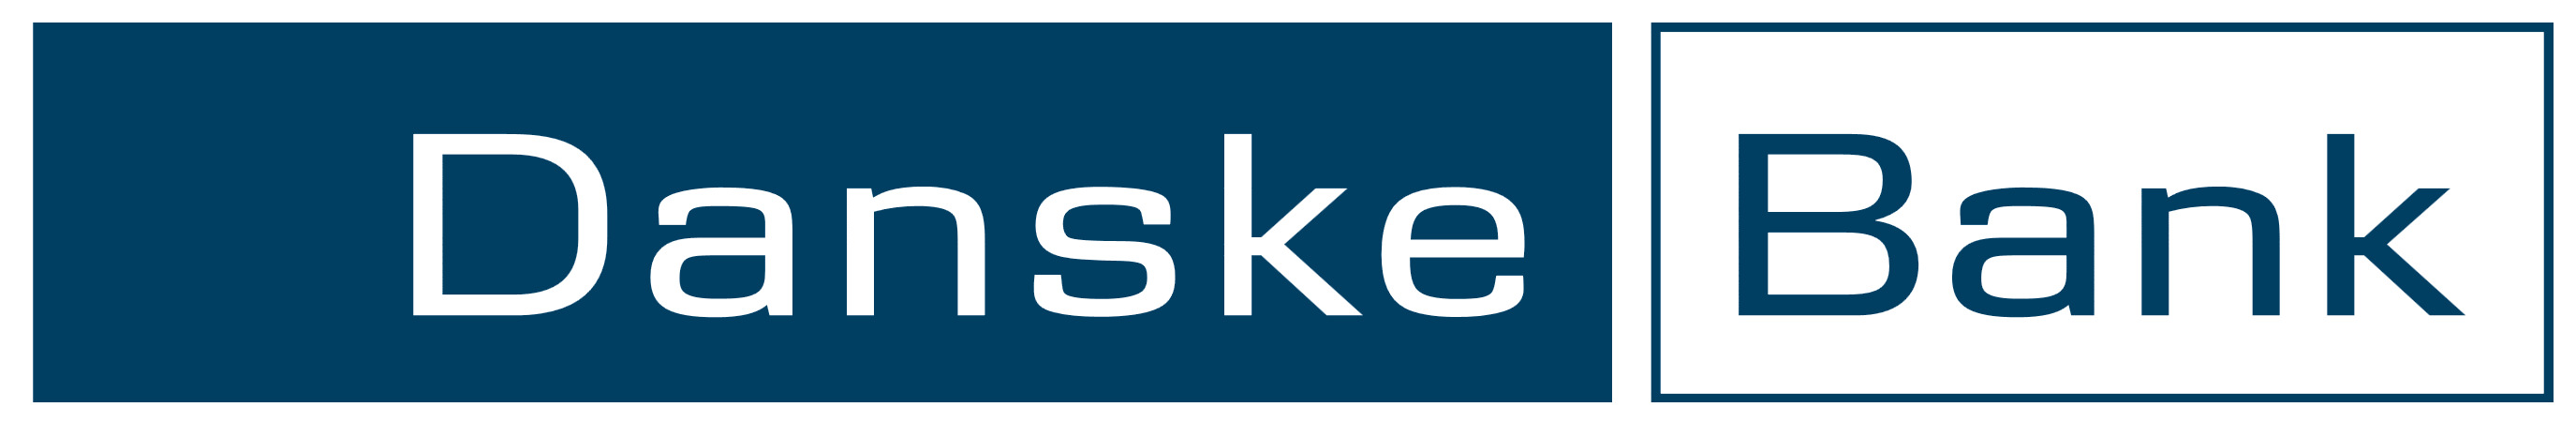 Danske Bank Logo icons